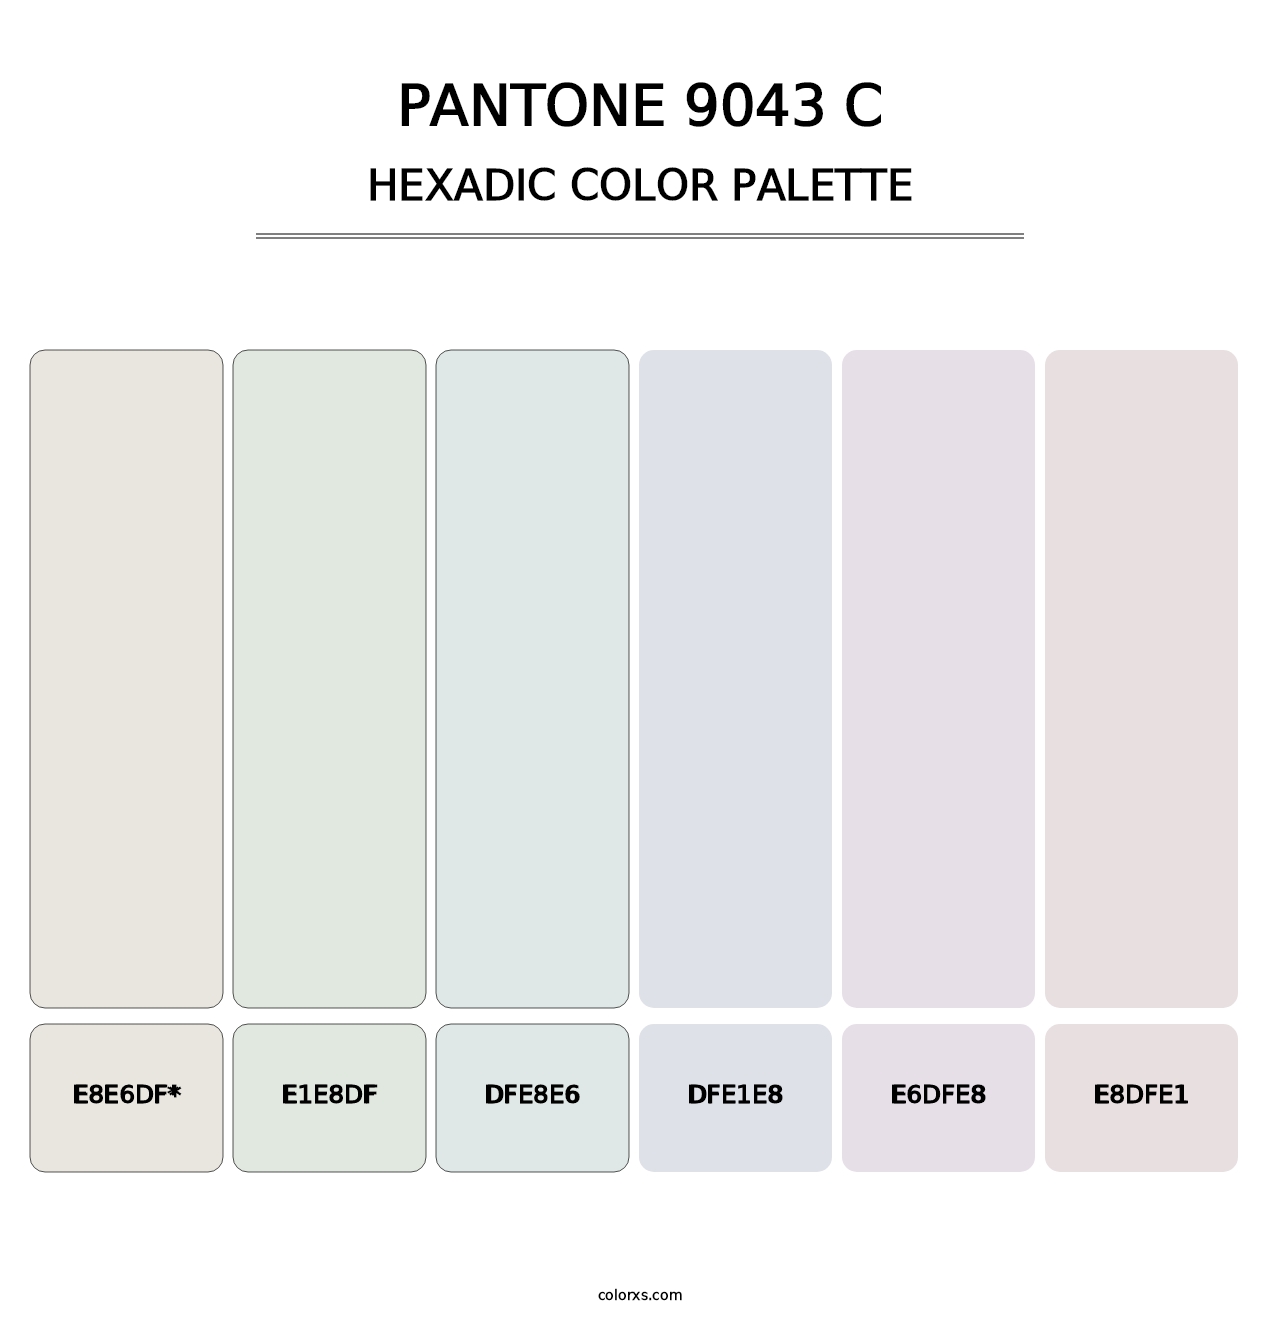 PANTONE 9043 C - Hexadic Color Palette